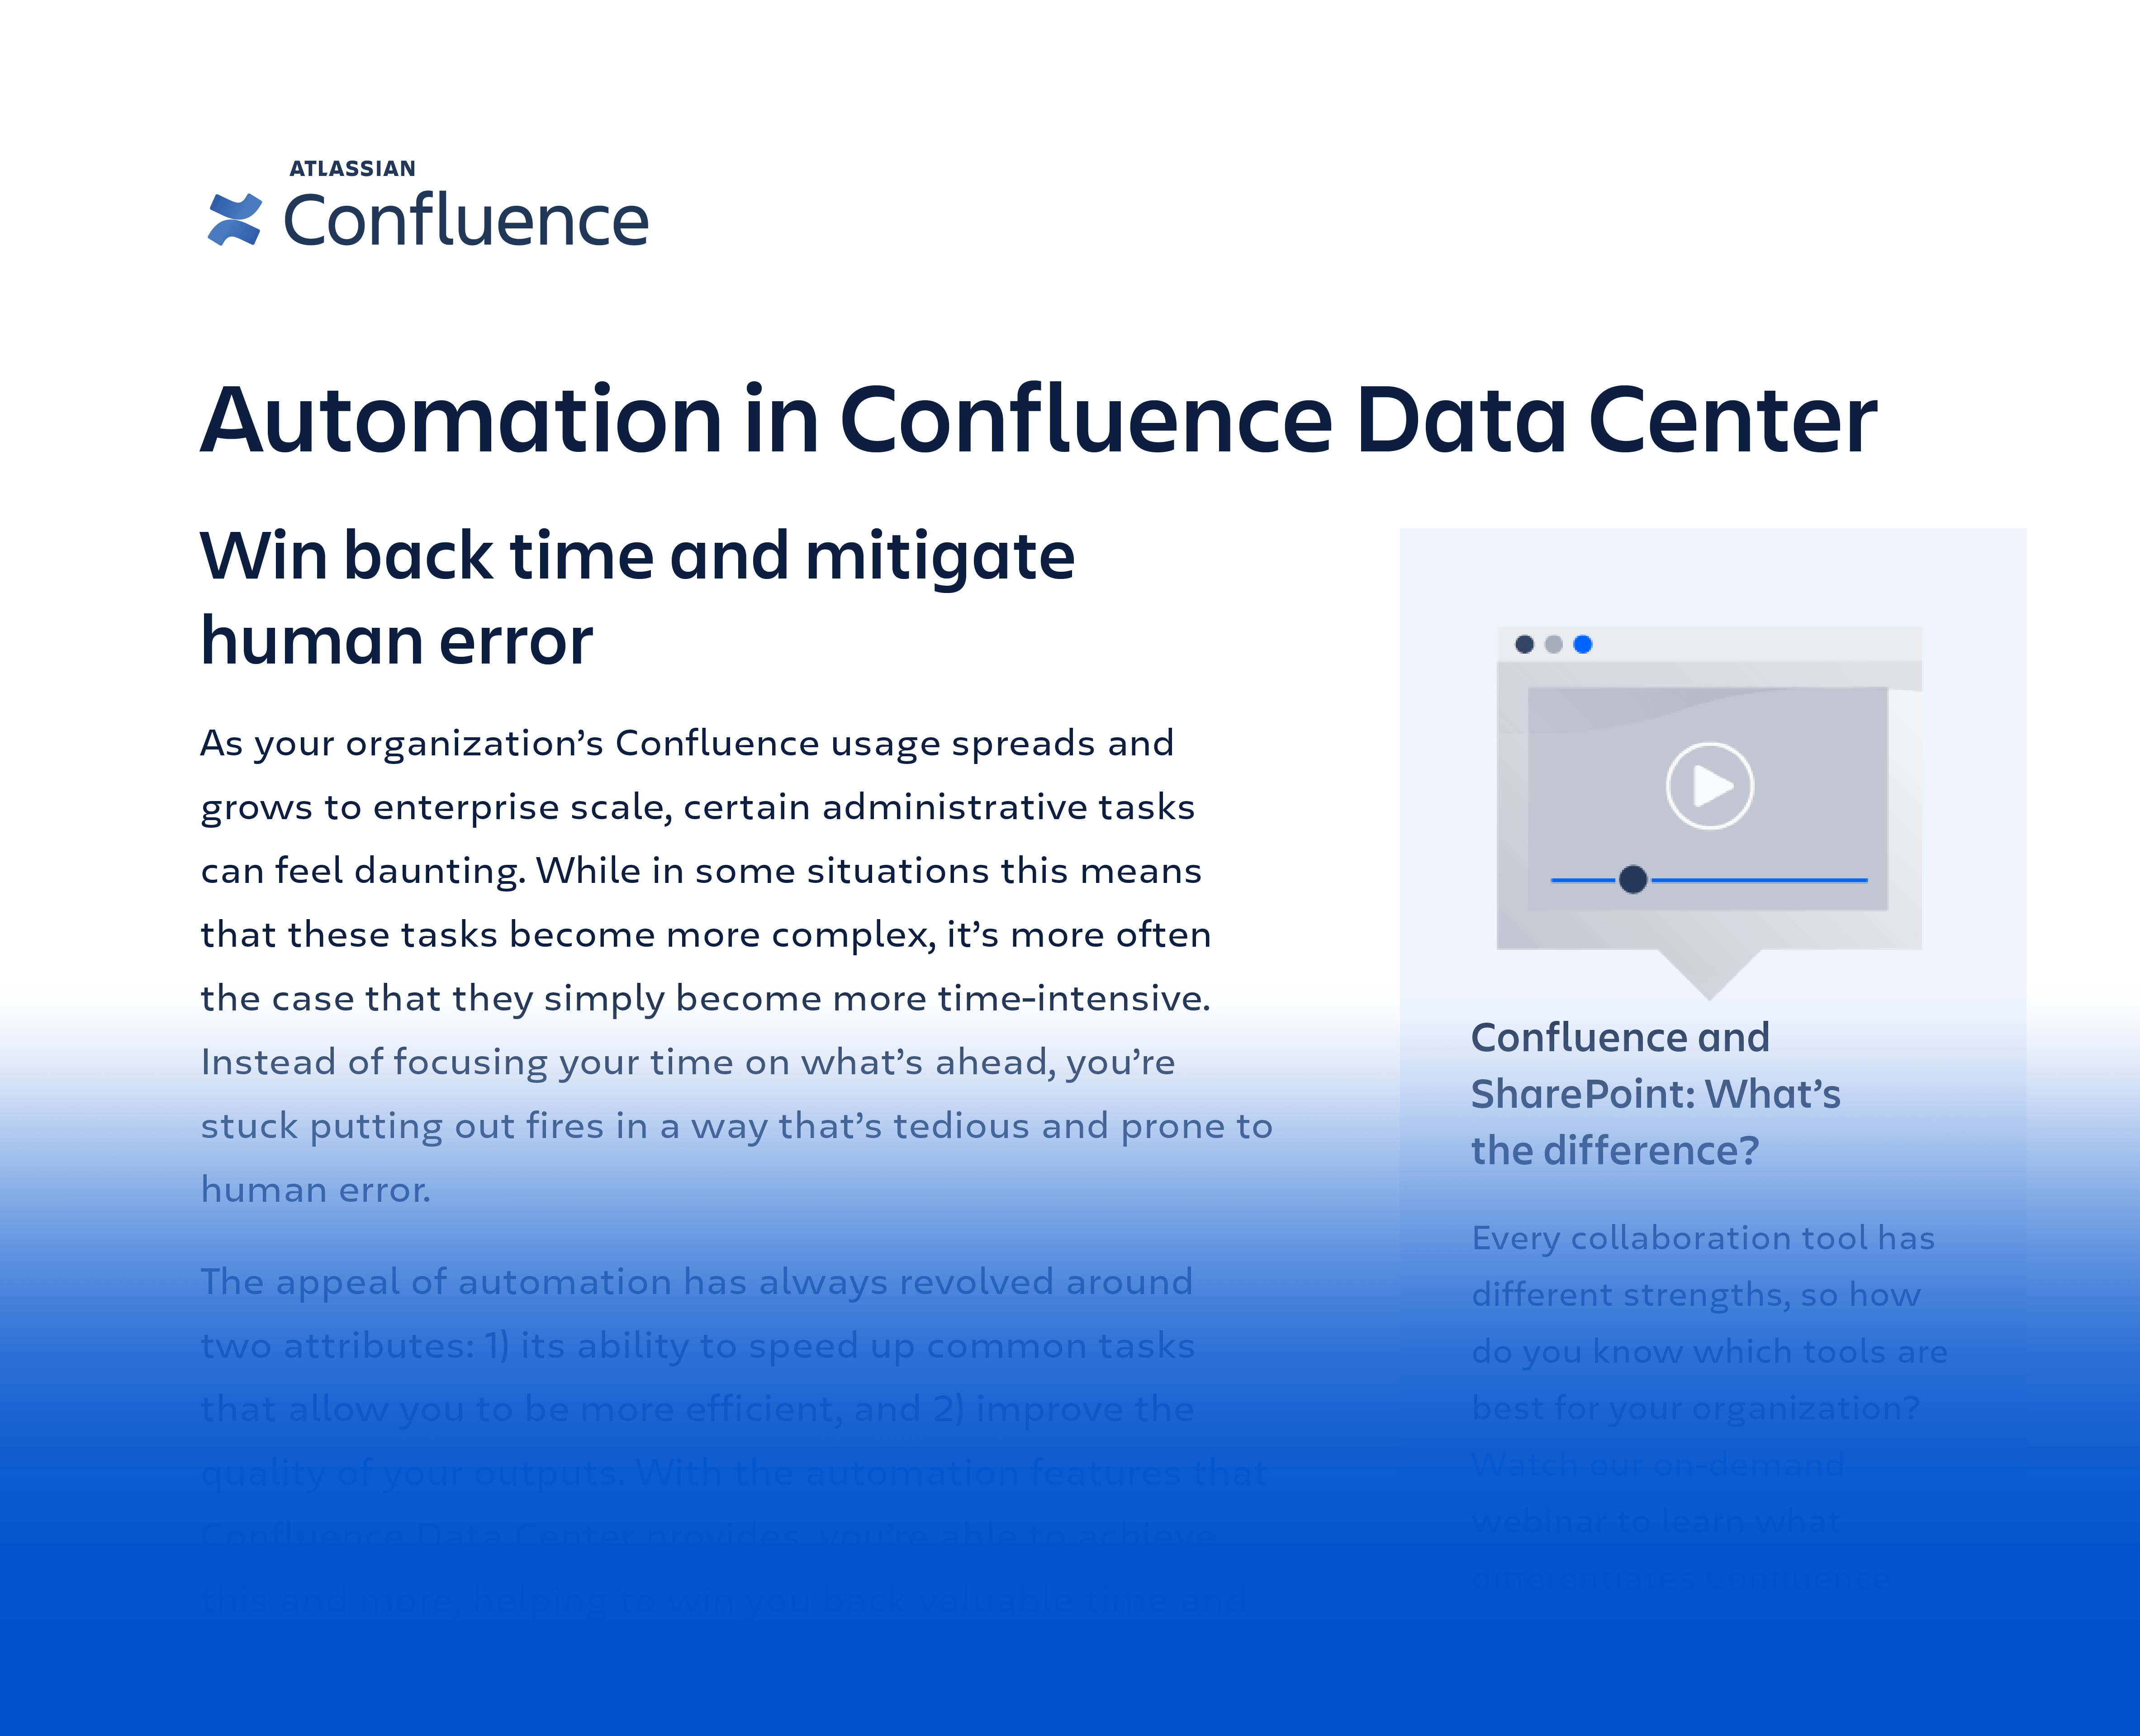 Hoja informativa: La automatización en Confluence Data Center